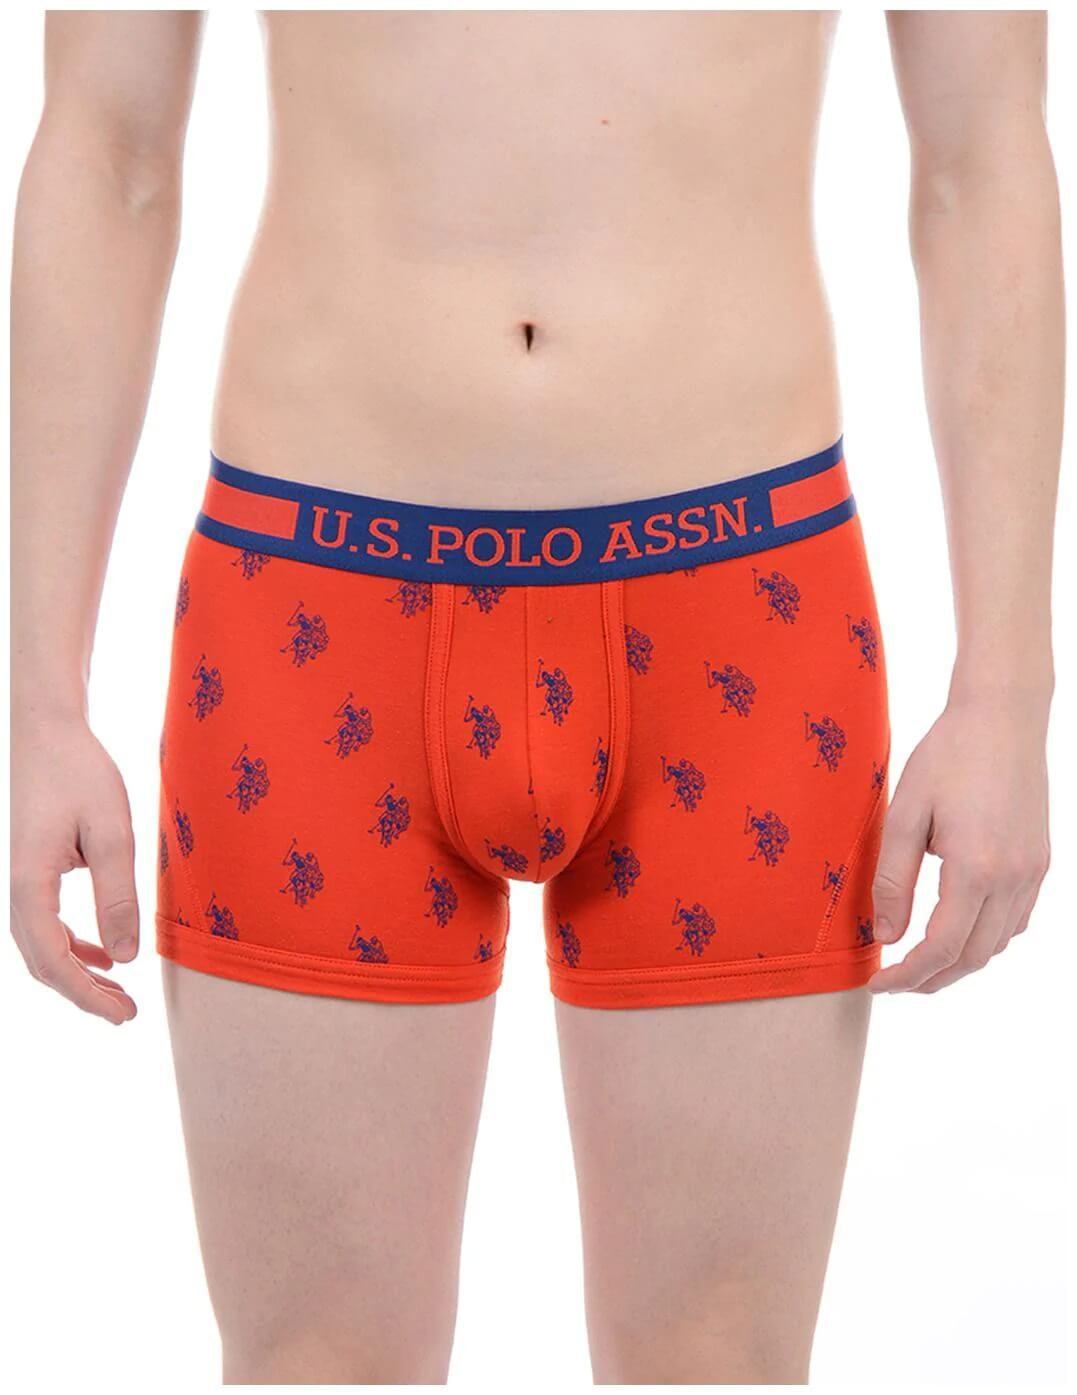 U S Polo Assn Orange Printed Trunk for Men #I112